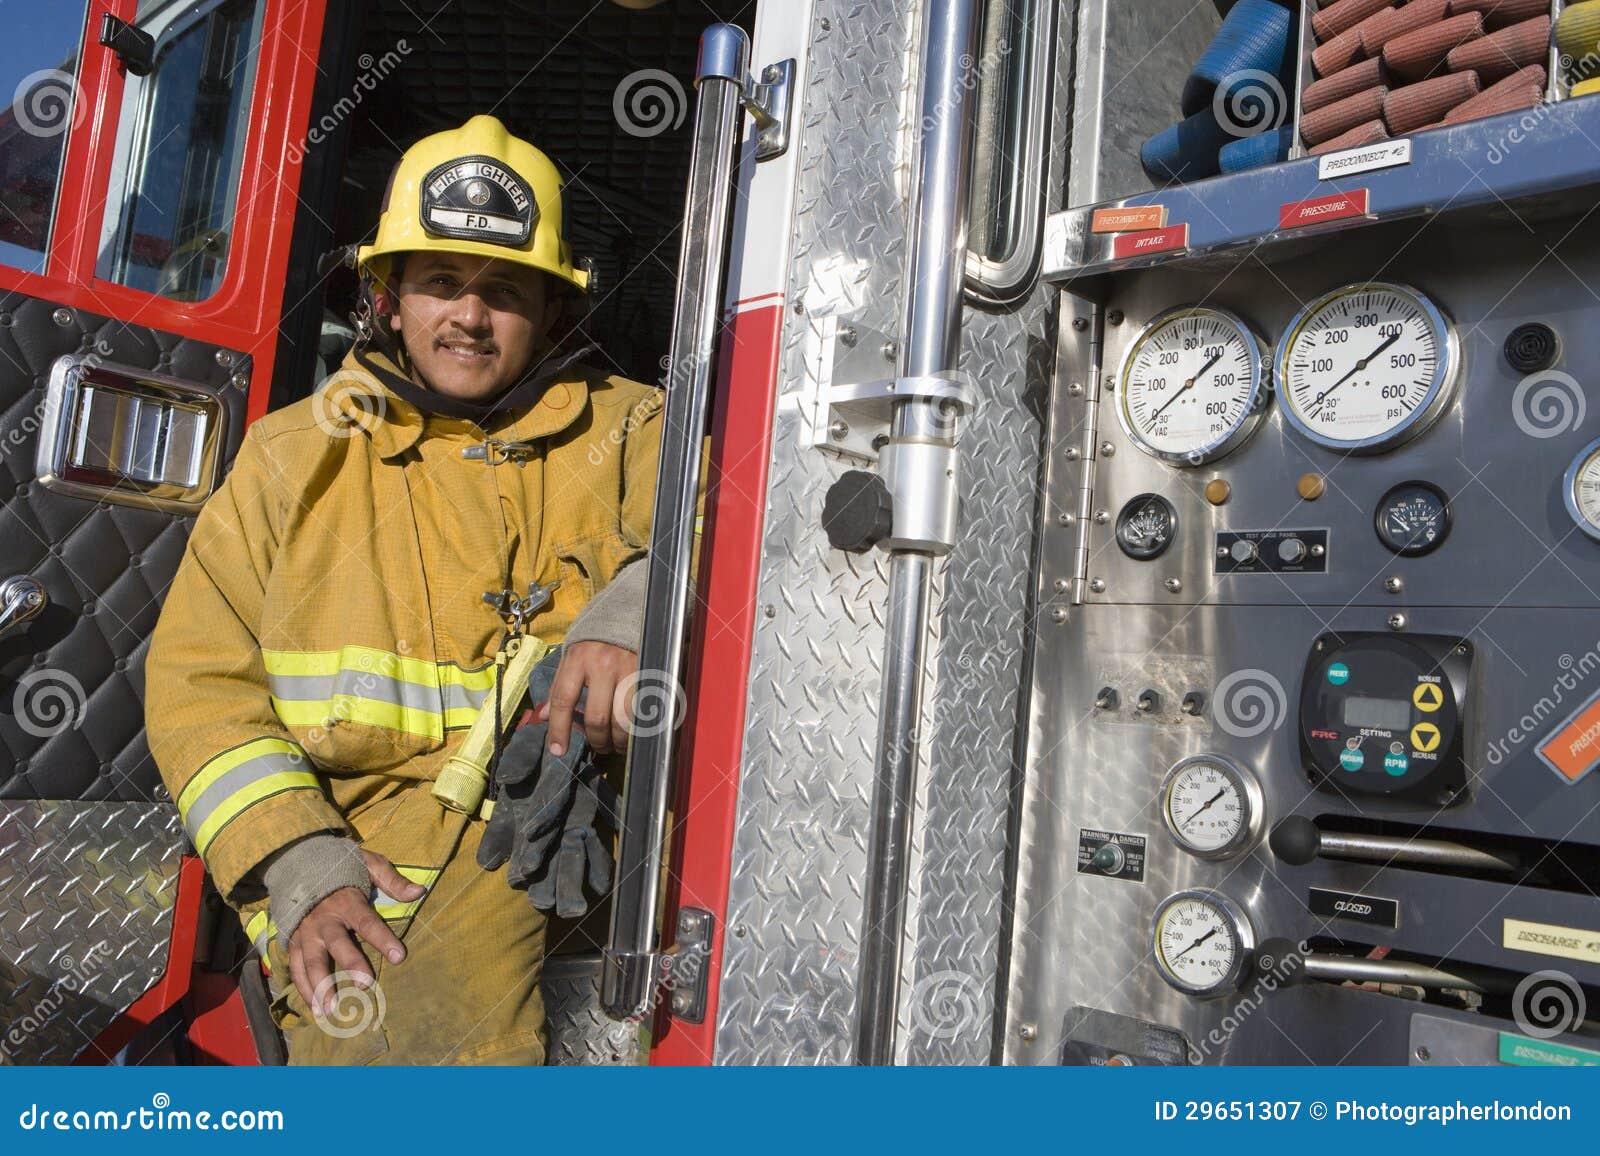 fire fighter sitting at fire brigade's door